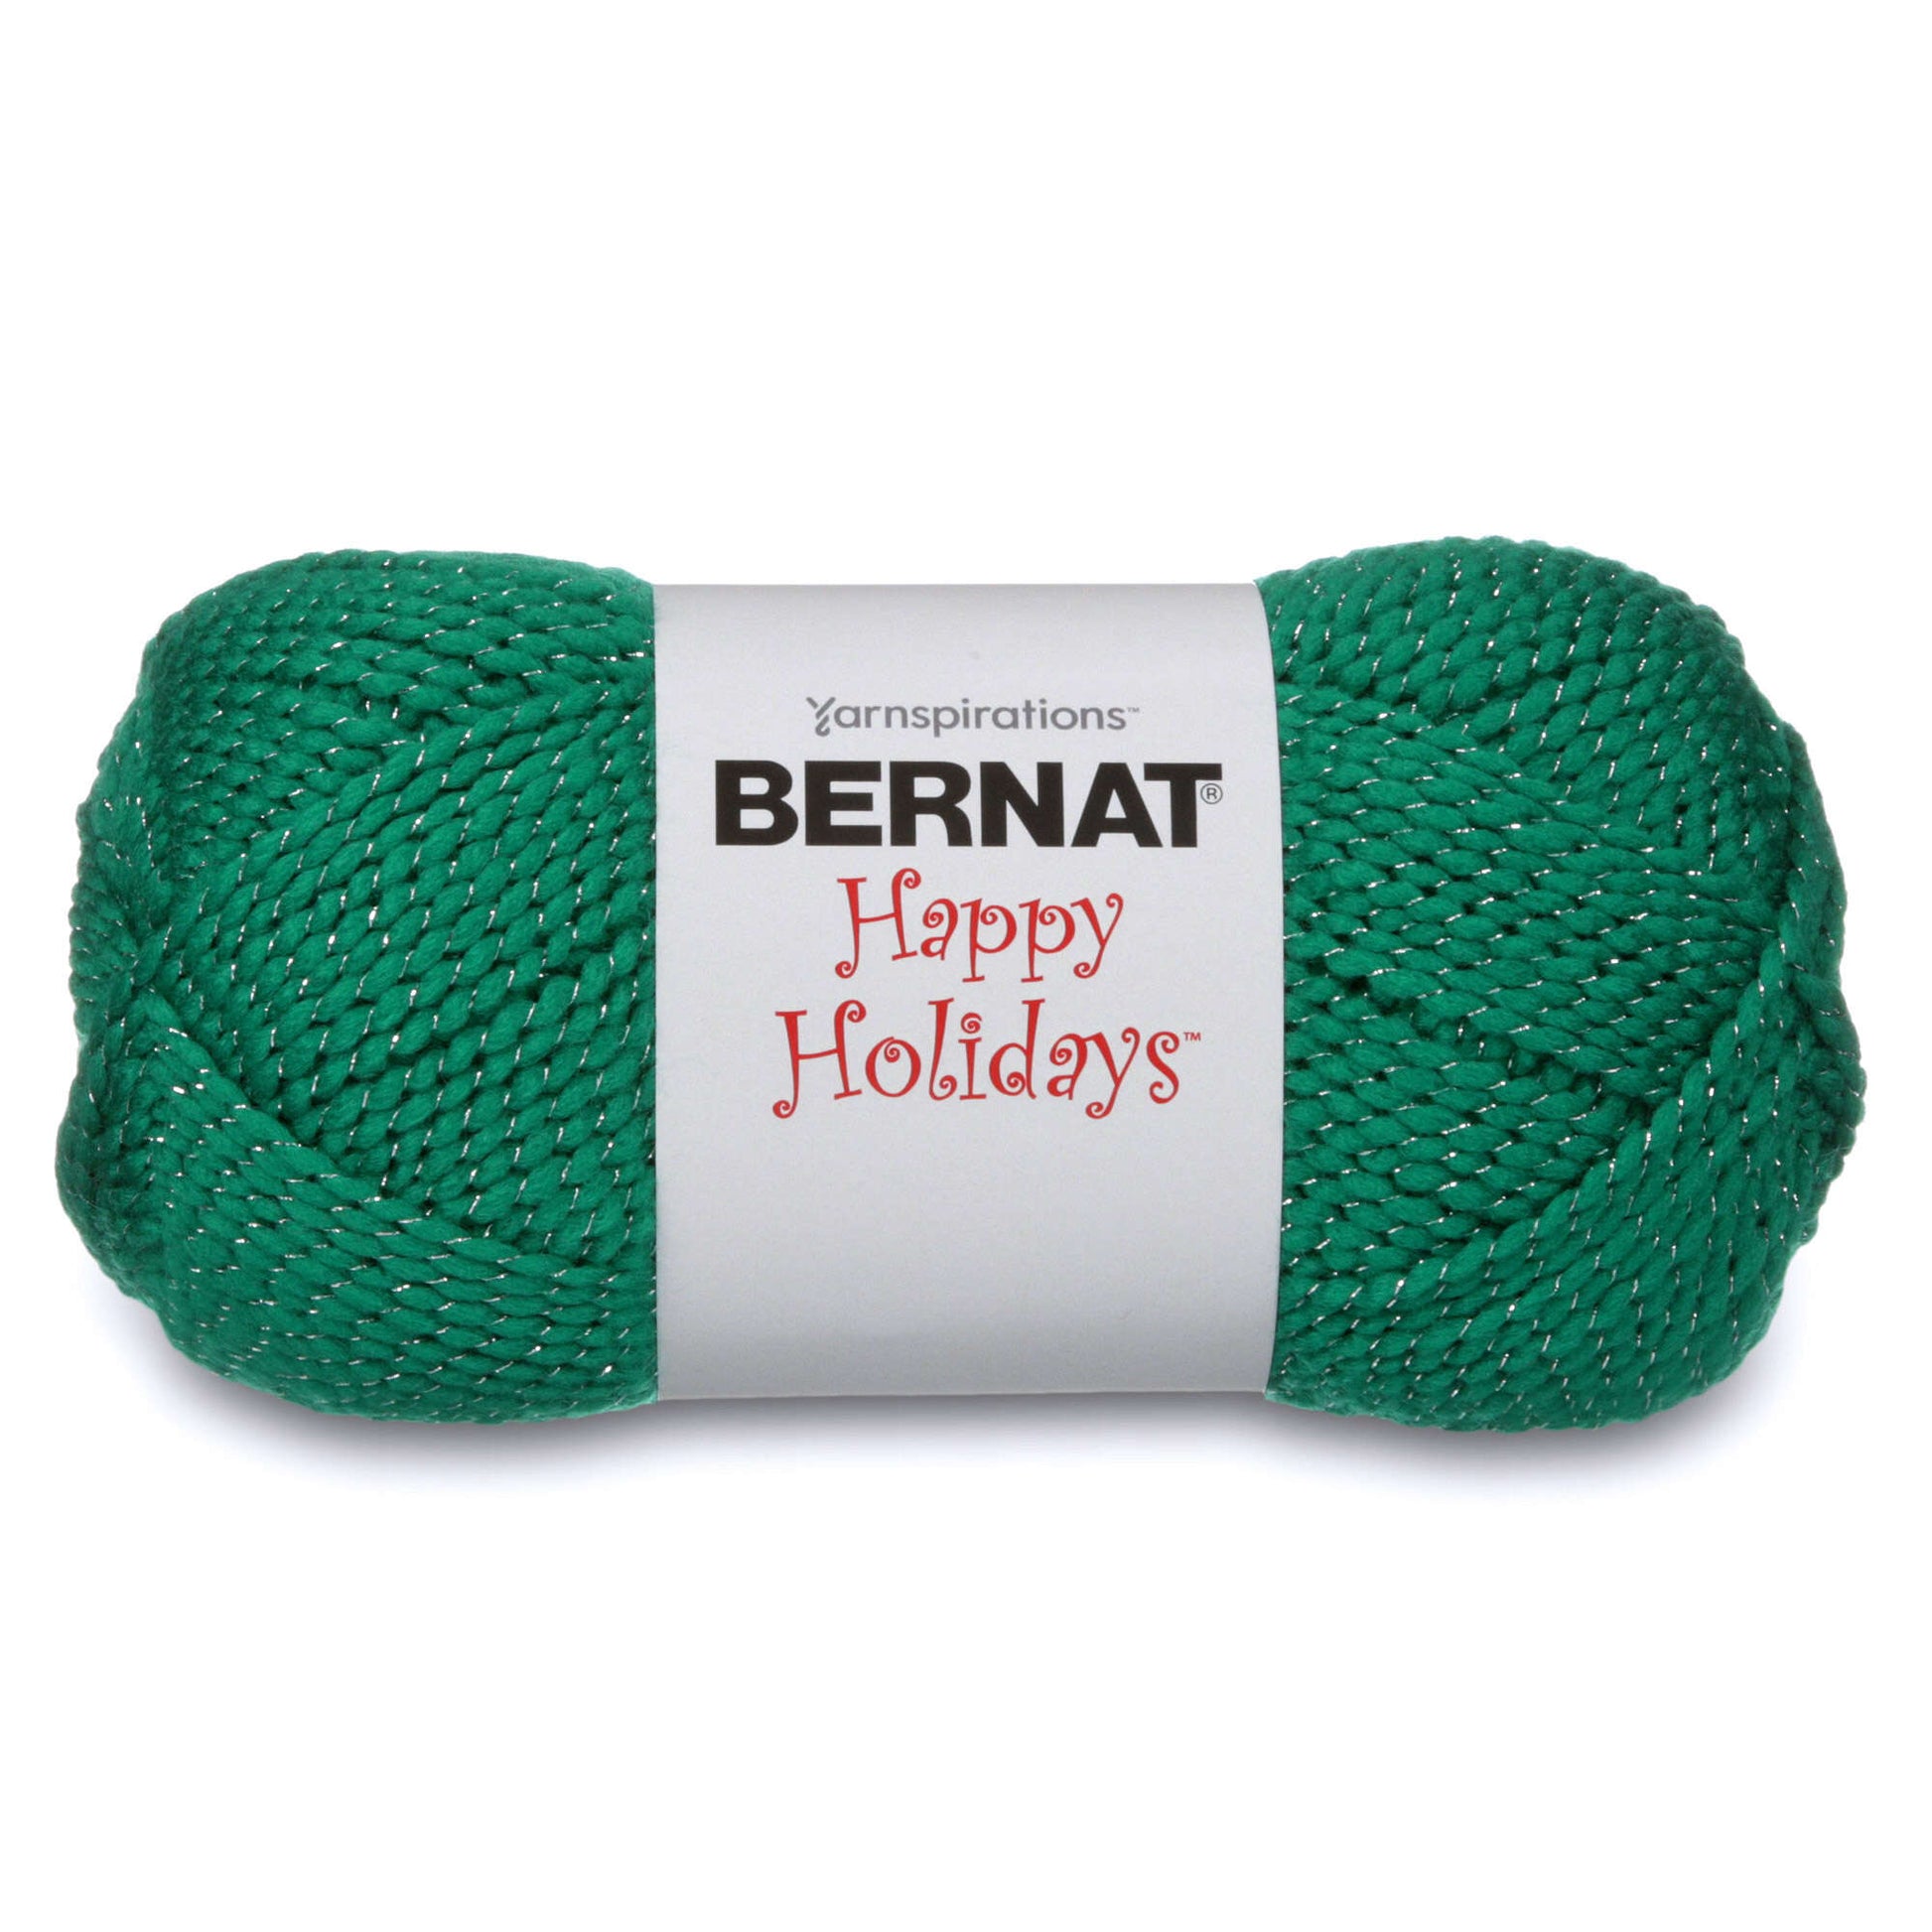 Bernat Happy Holidays Yarn - Discontinued